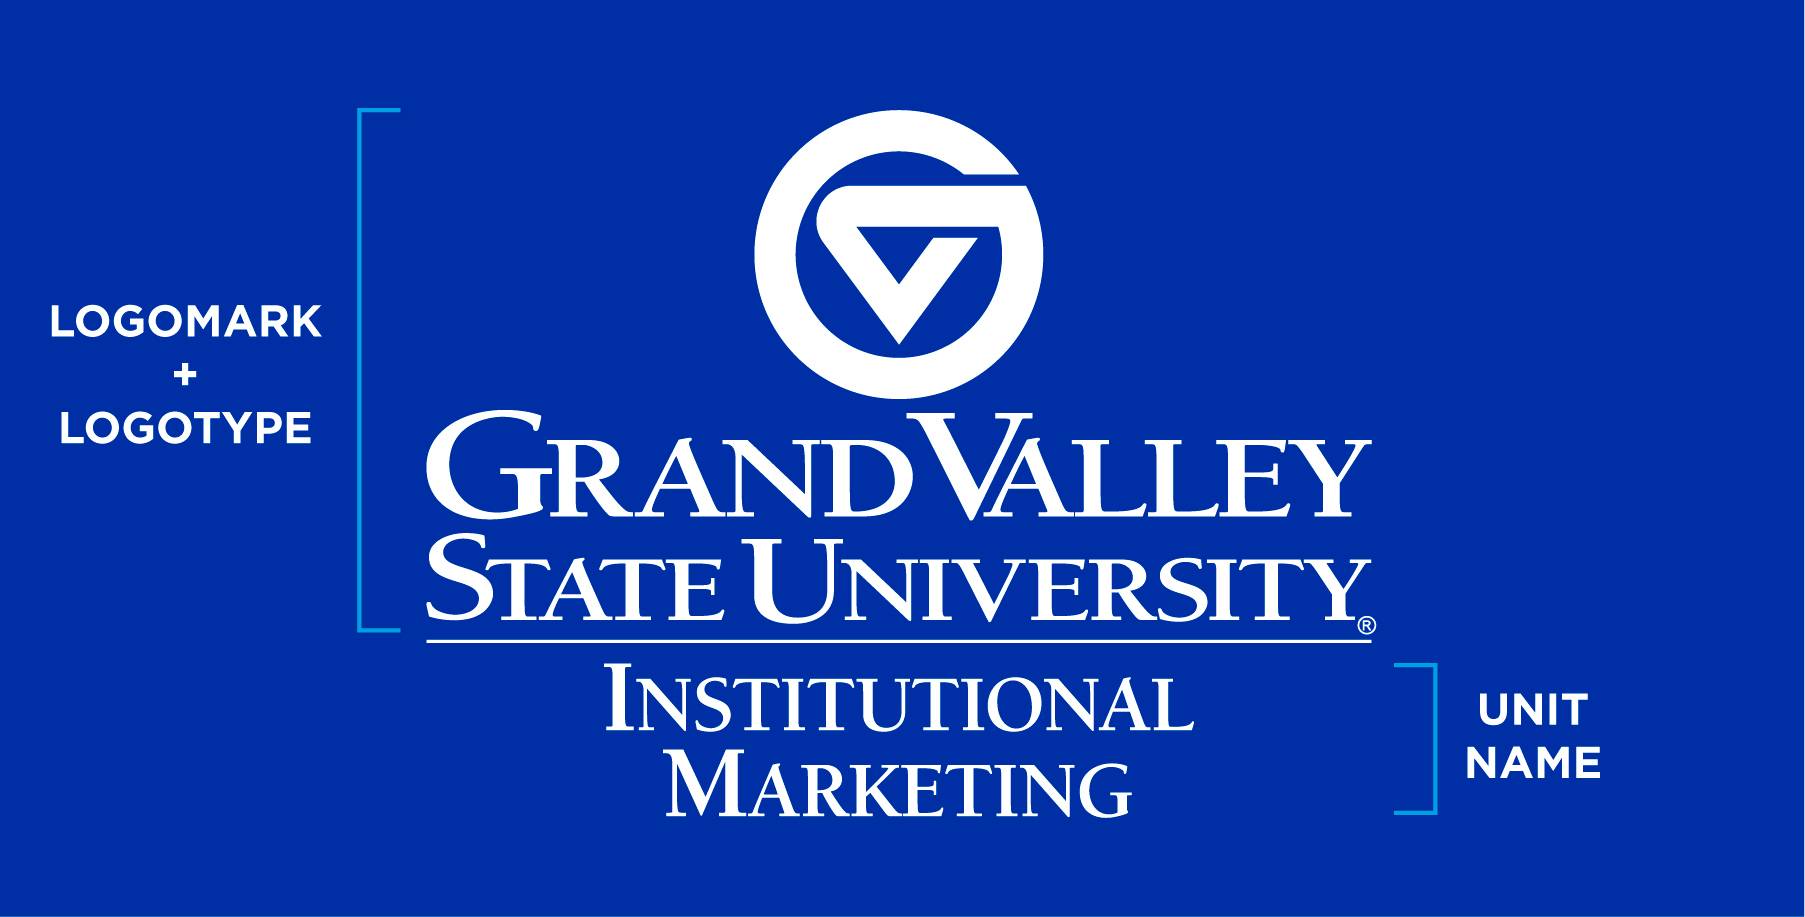 Institutional Marketing combination logo